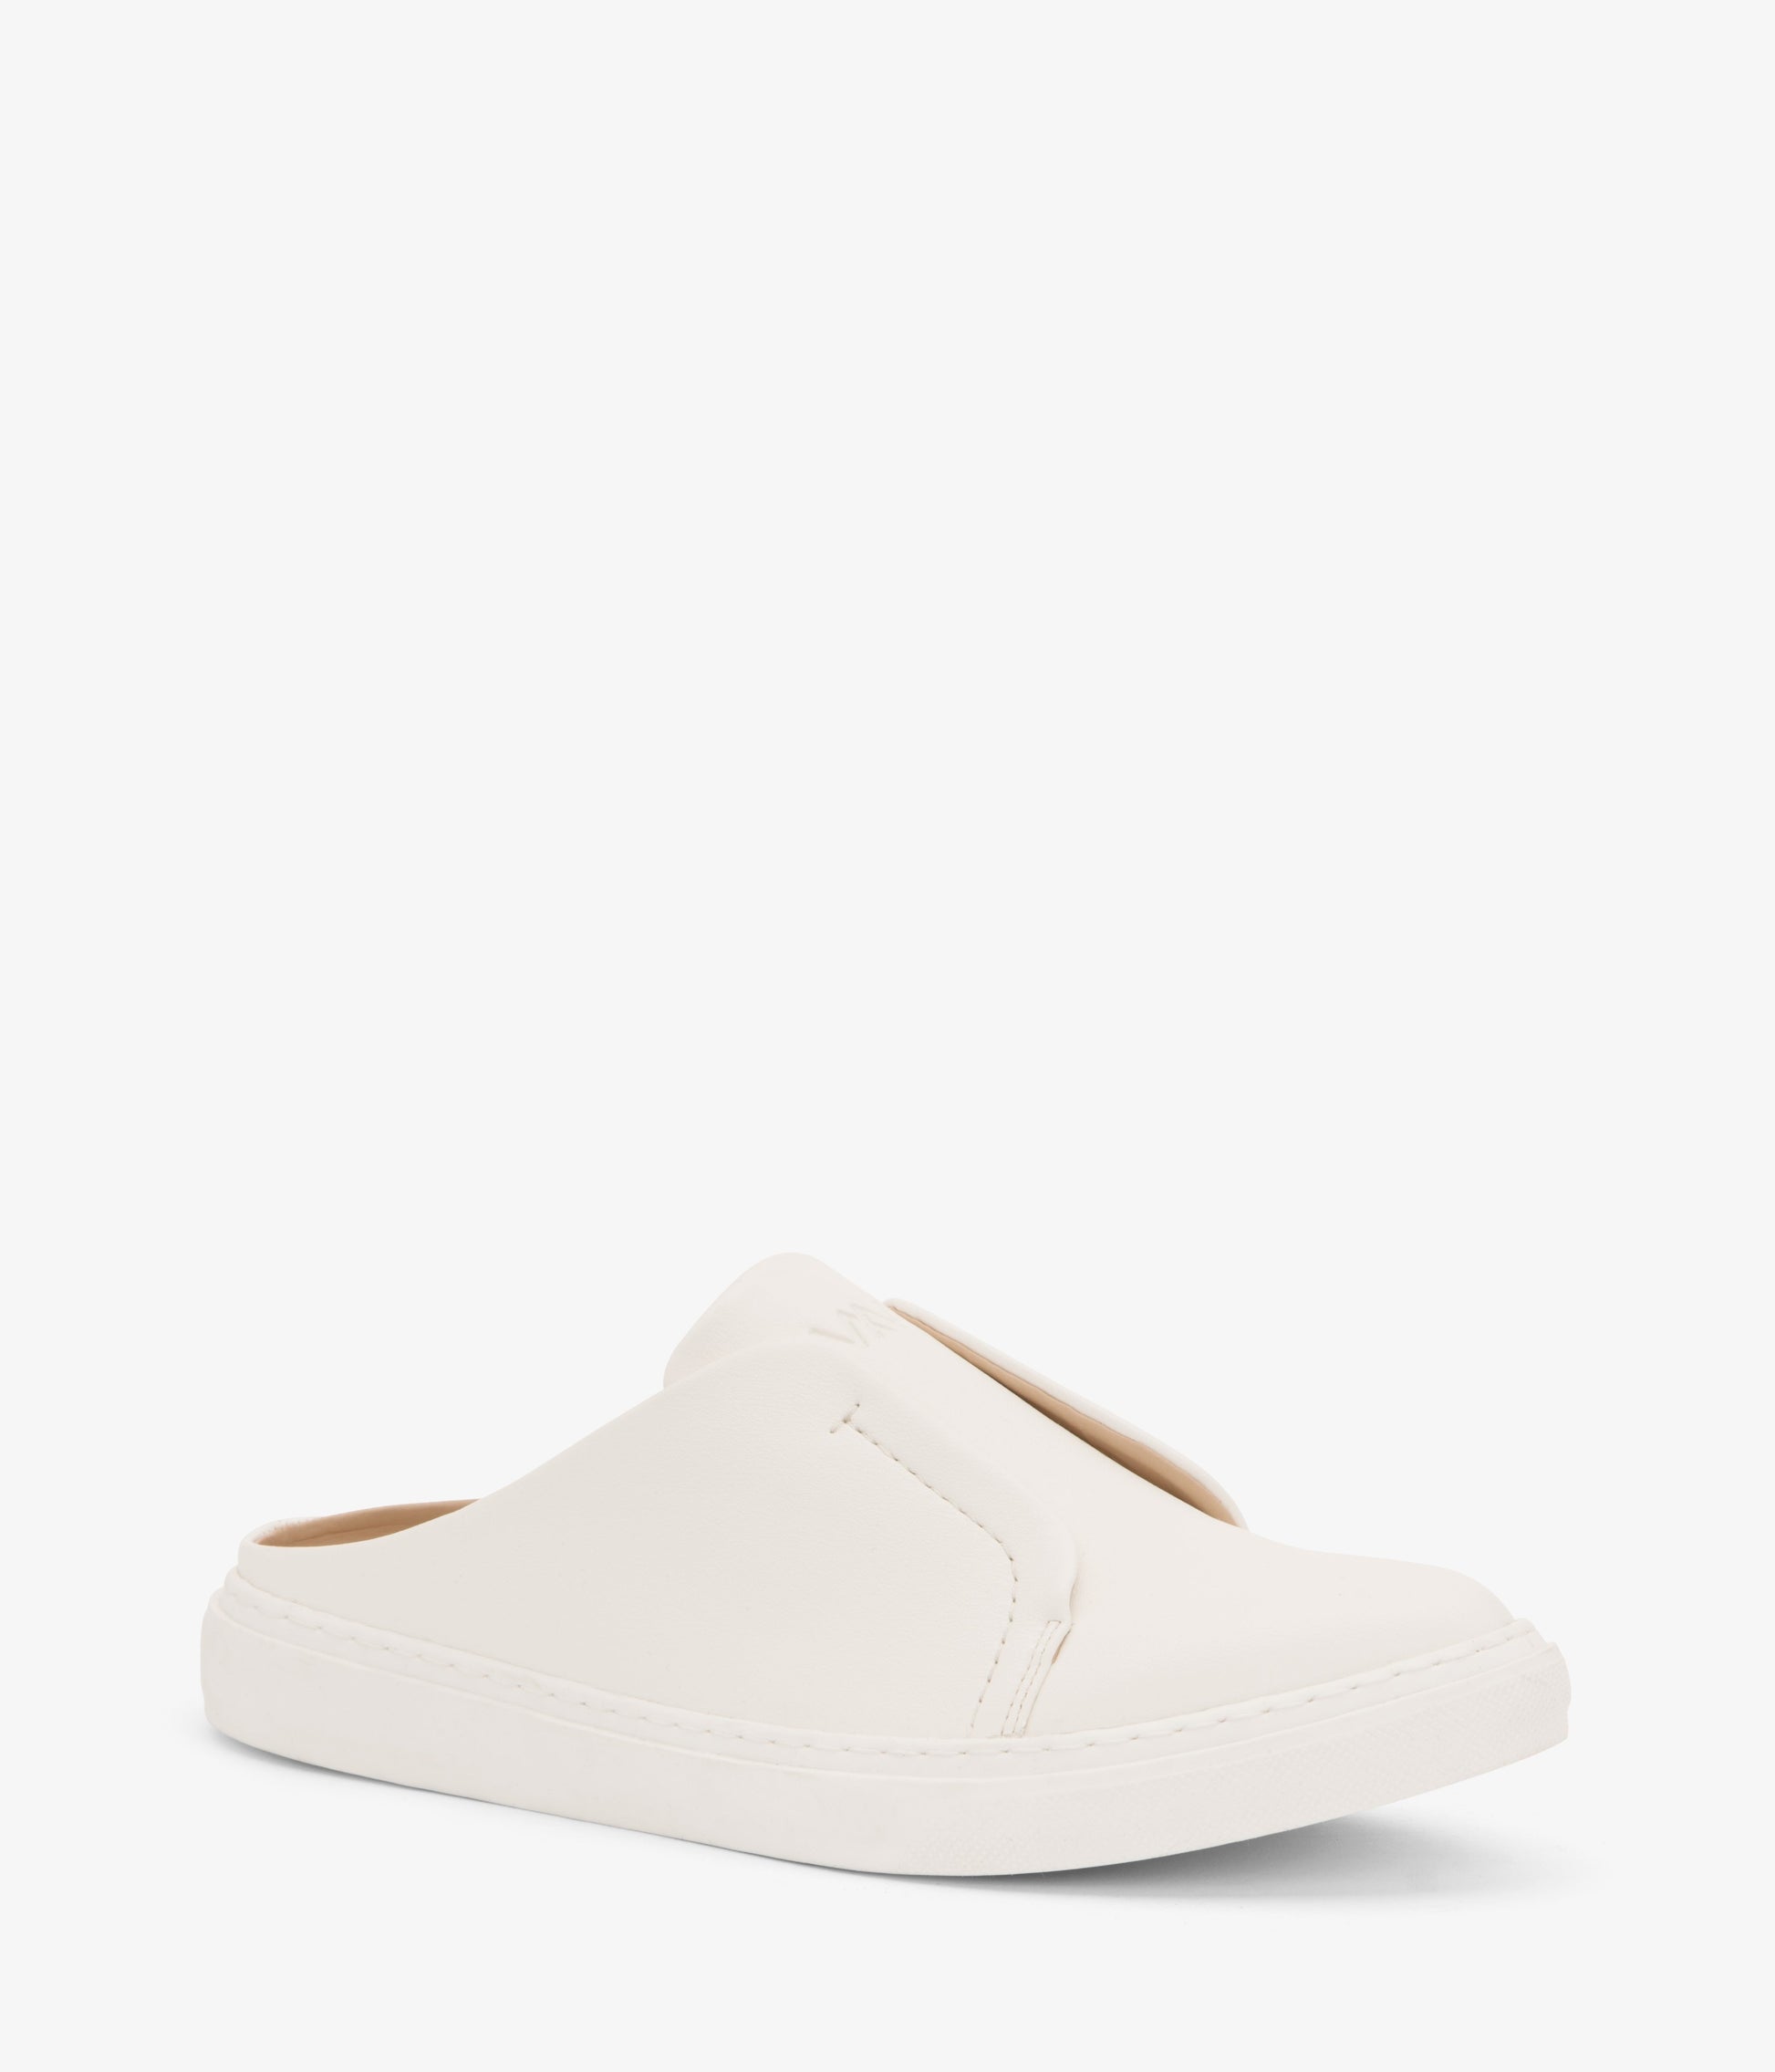 variant::blanc -- elma shoe blanc